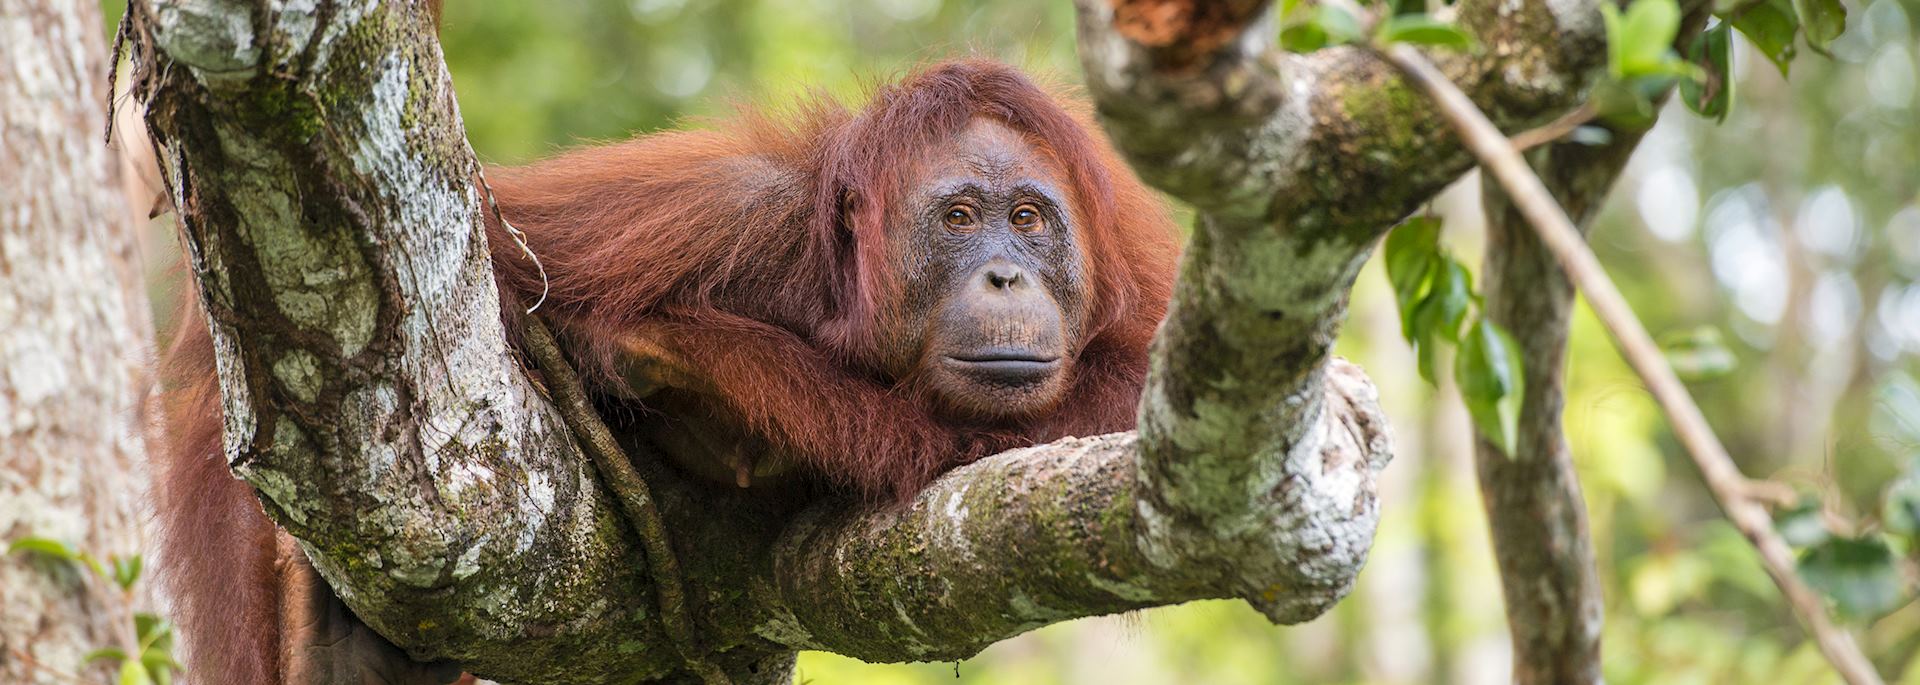 Female orangutan, Borneo